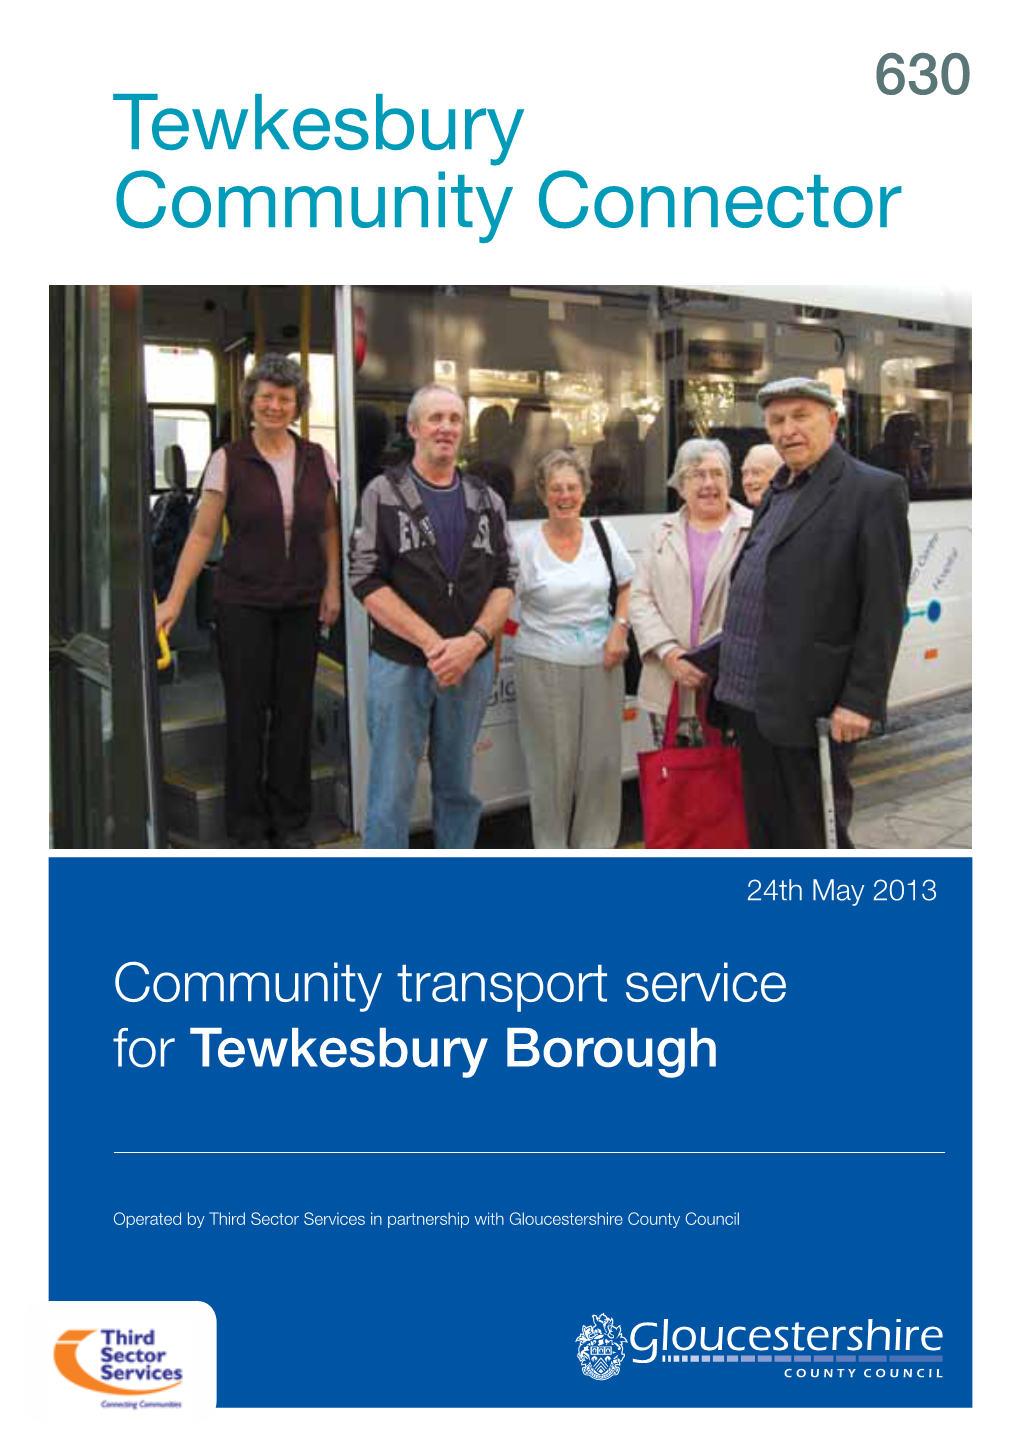 Tewkesbury Community Connector